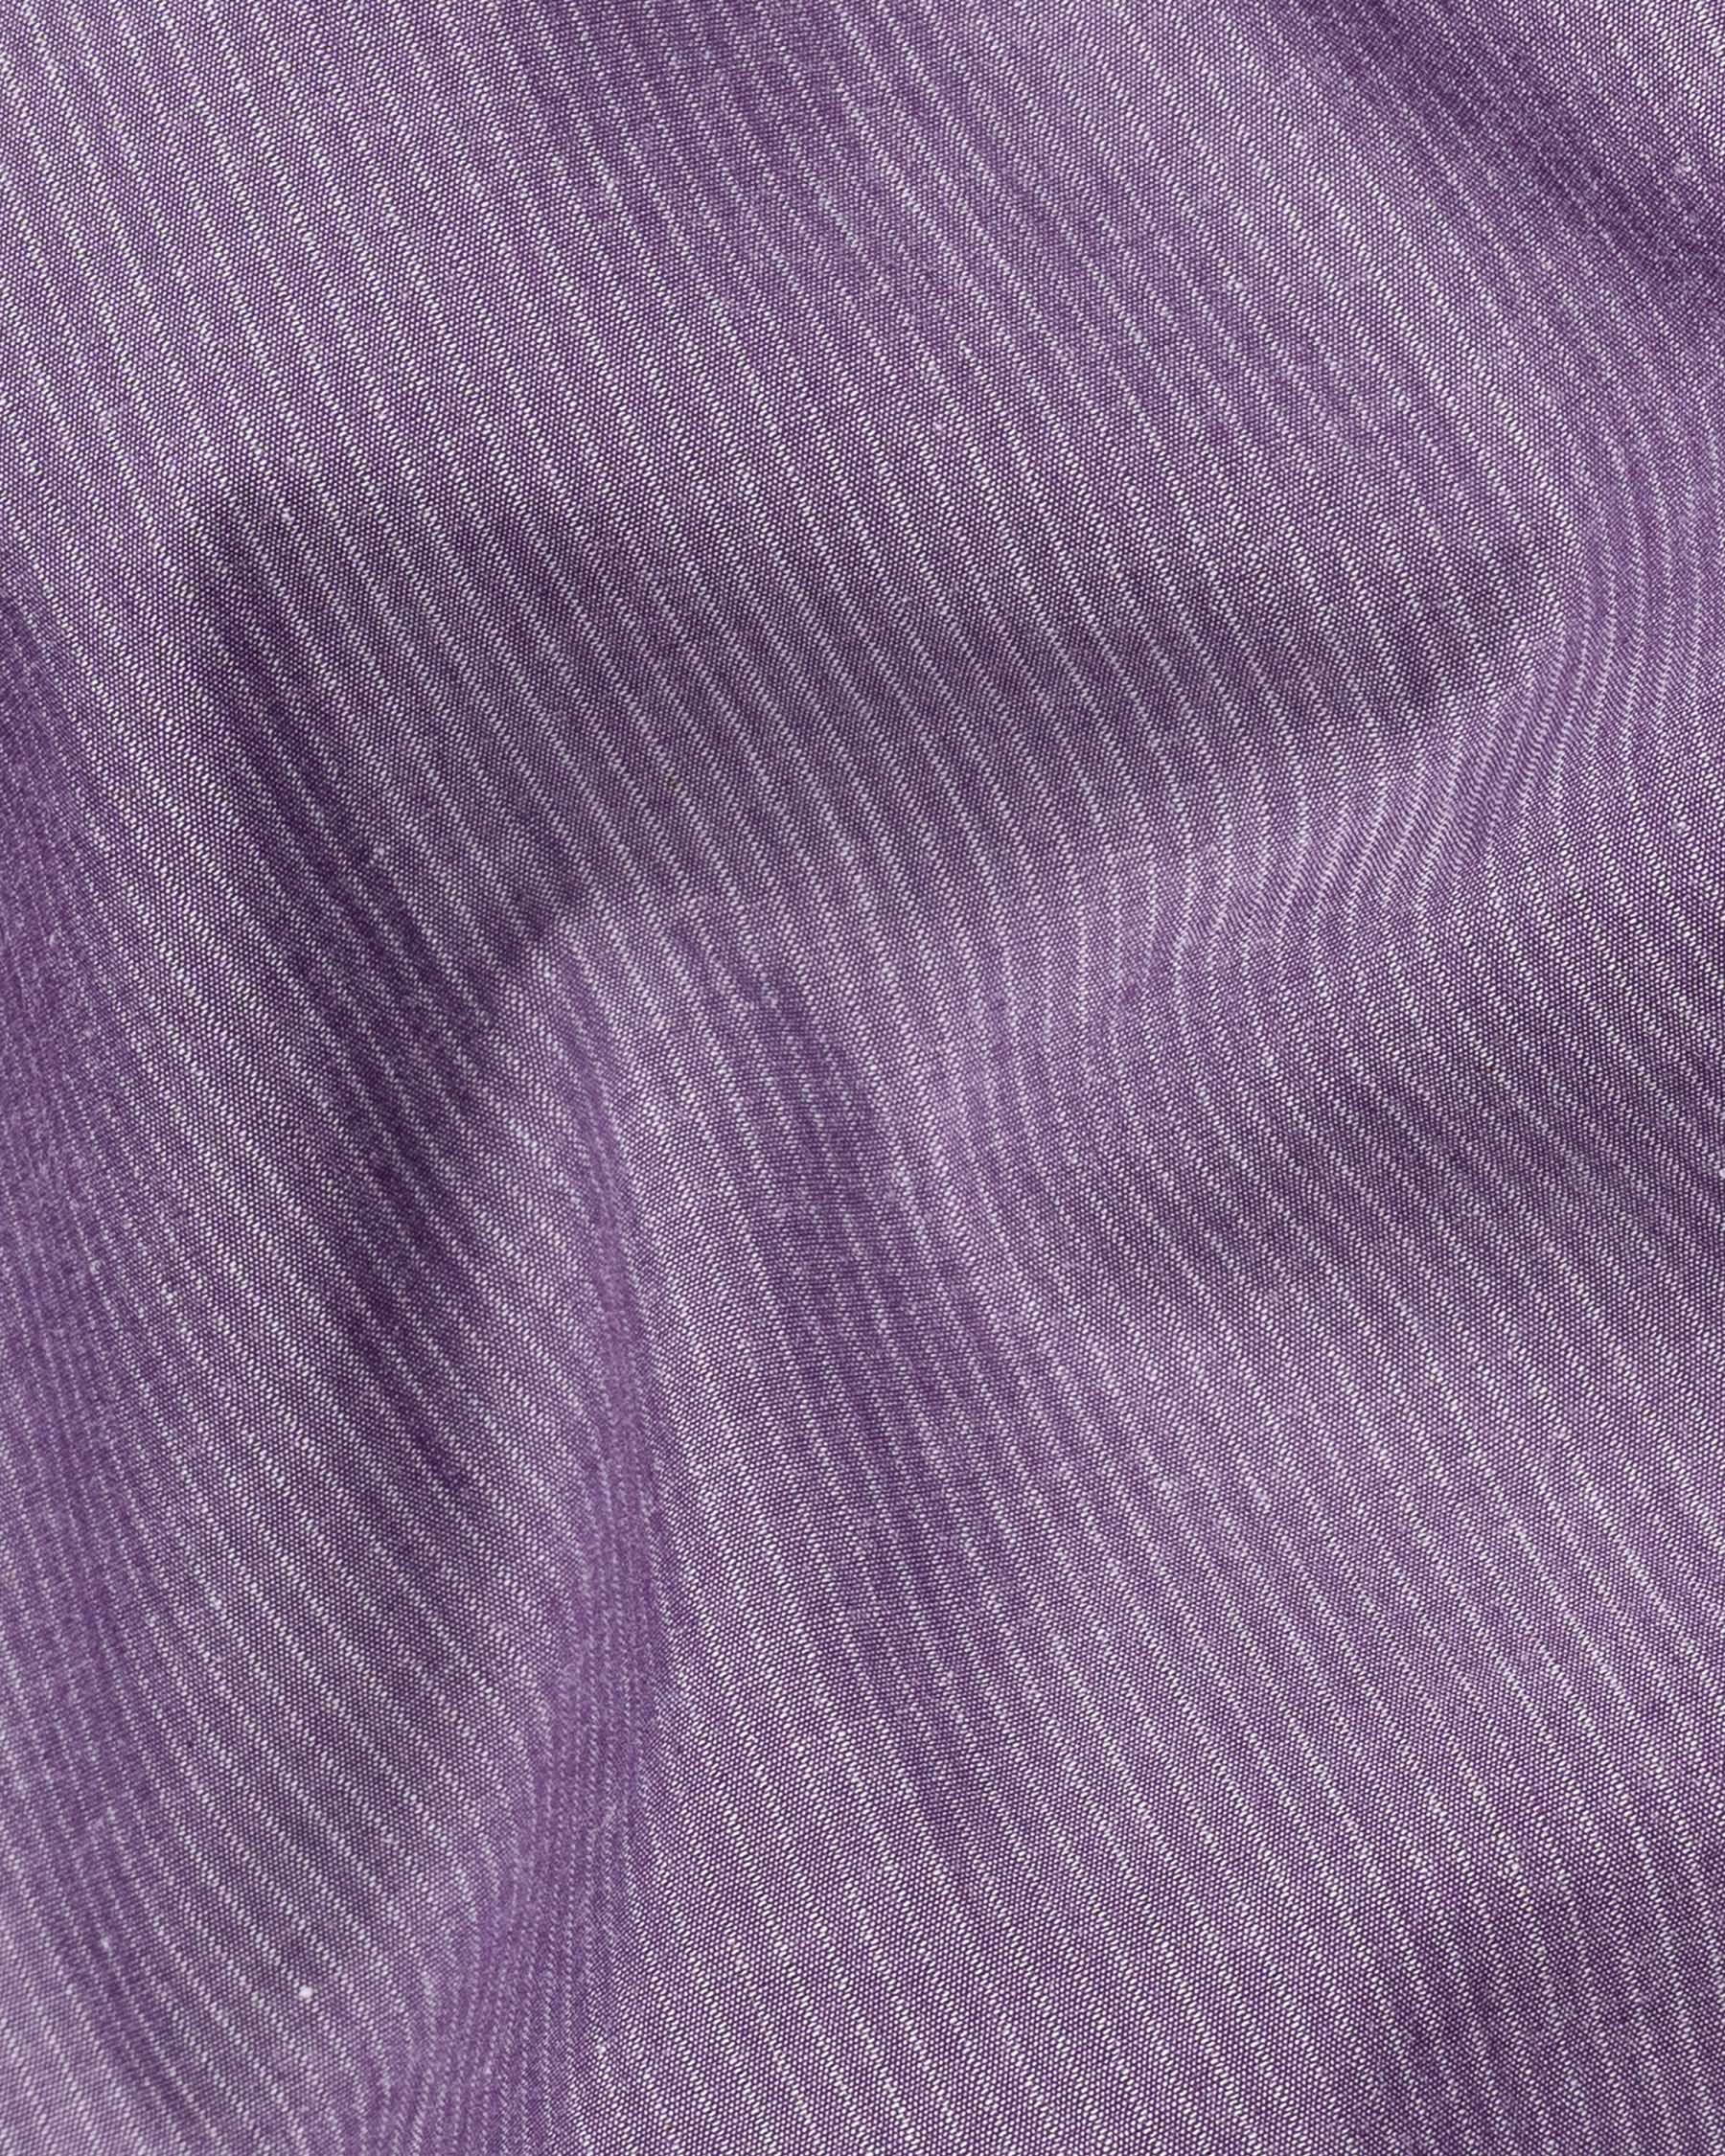 Viola Striped Premium Cotton Shirt 6881-38,6881-38,6881-39,6881-39,6881-40,6881-40,6881-42,6881-42,6881-44,6881-44,6881-46,6881-46,6881-48,6881-48,6881-50,6881-50,6881-52,6881-52